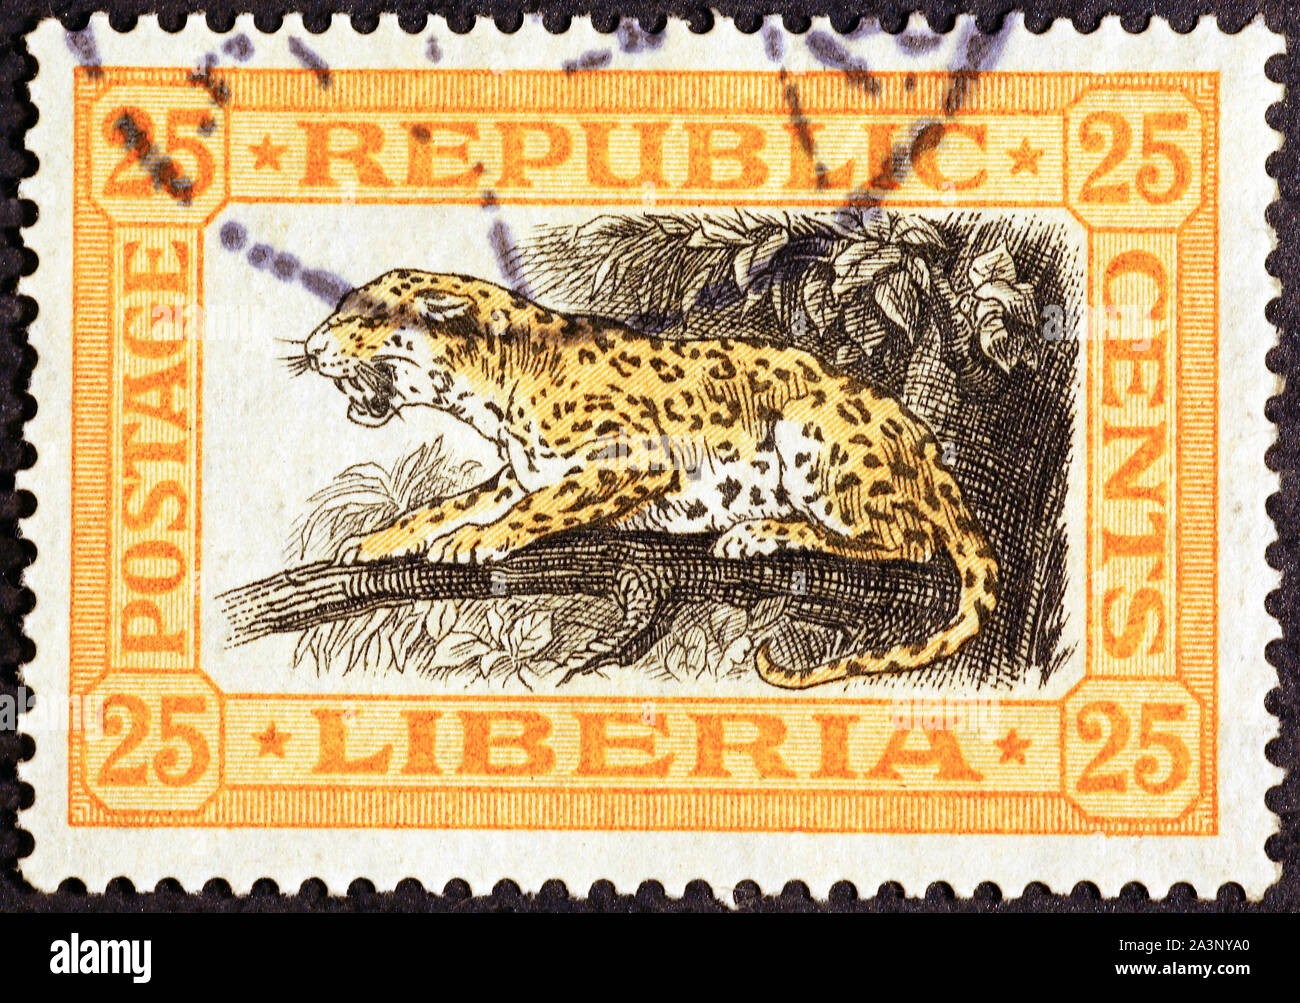 Leopard on vintage postage stamp of Liberia Stock Photo